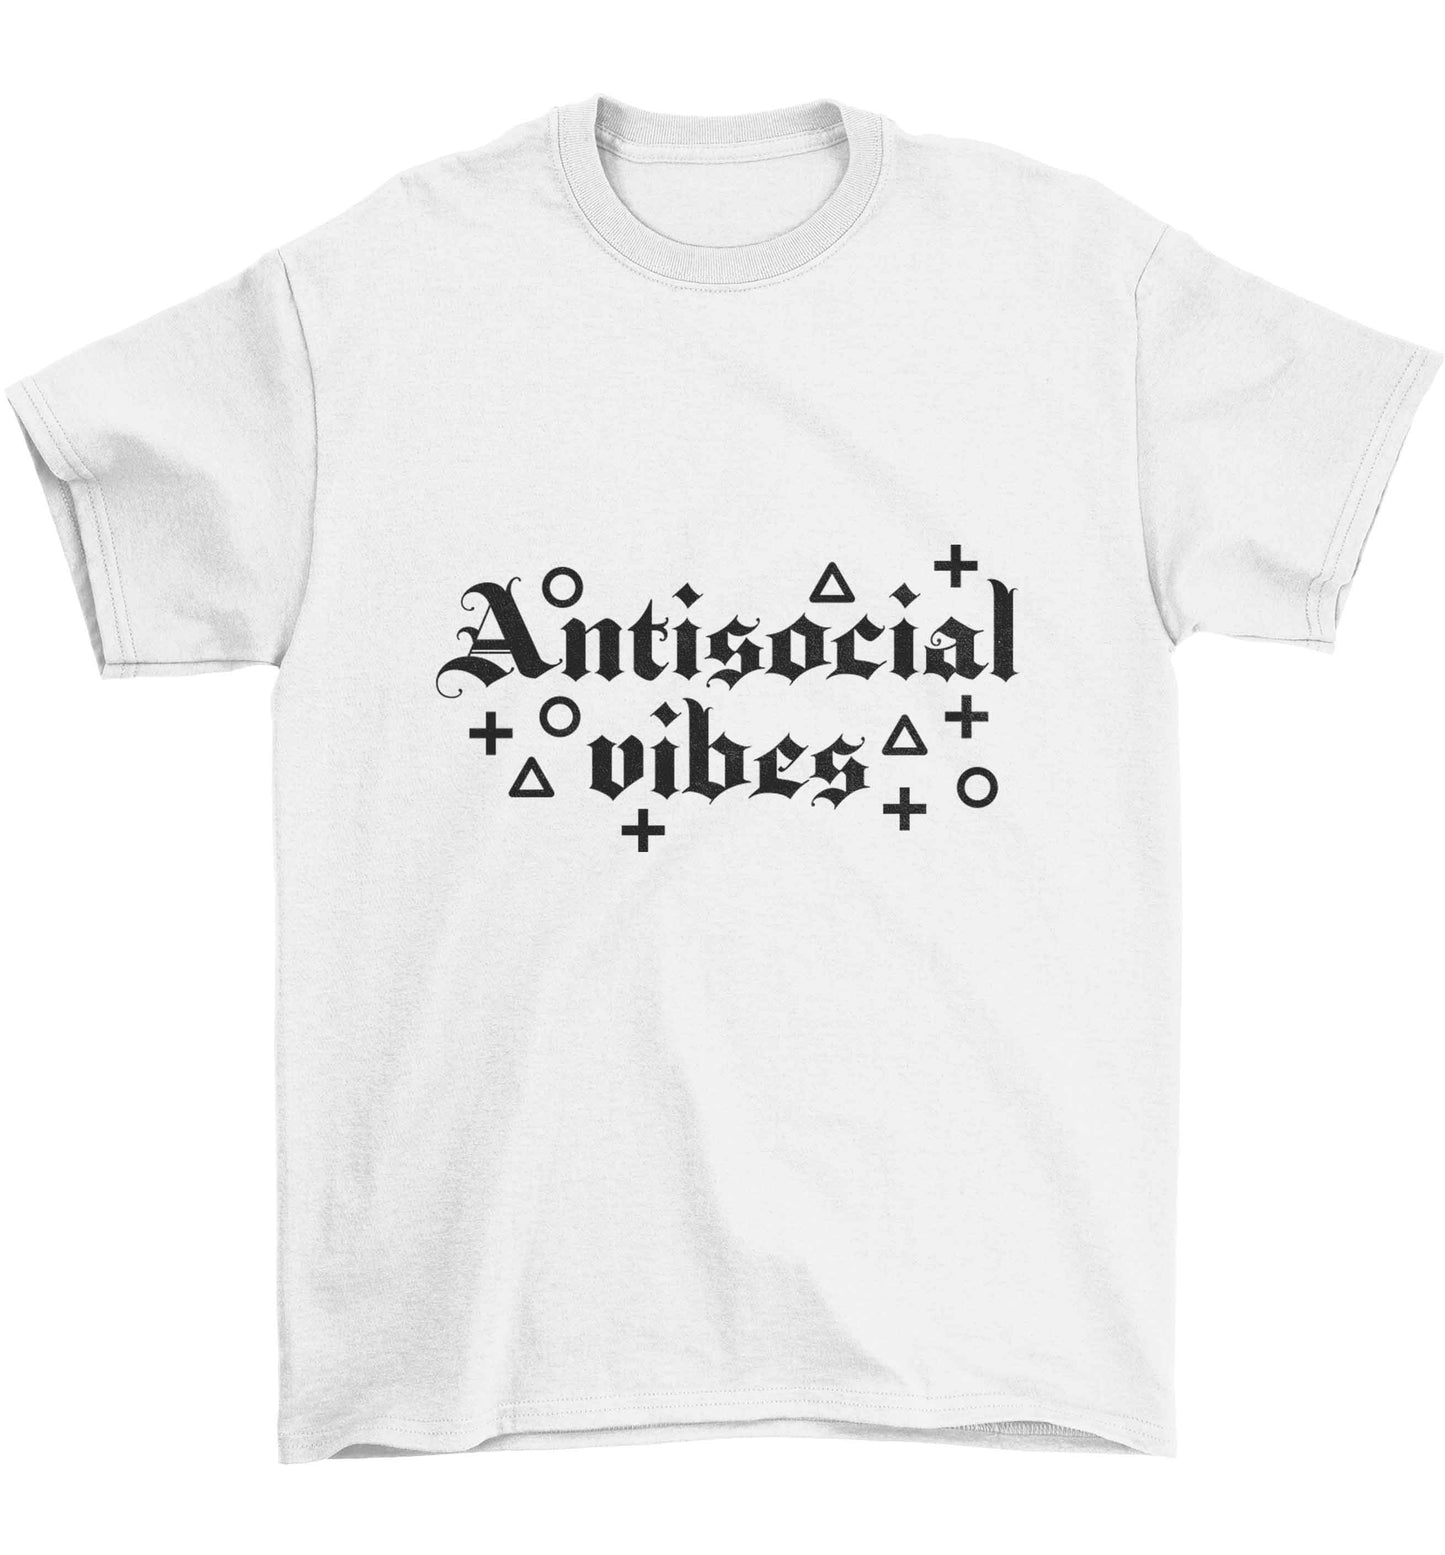 Antisocial vibes Children's white Tshirt 12-13 Years